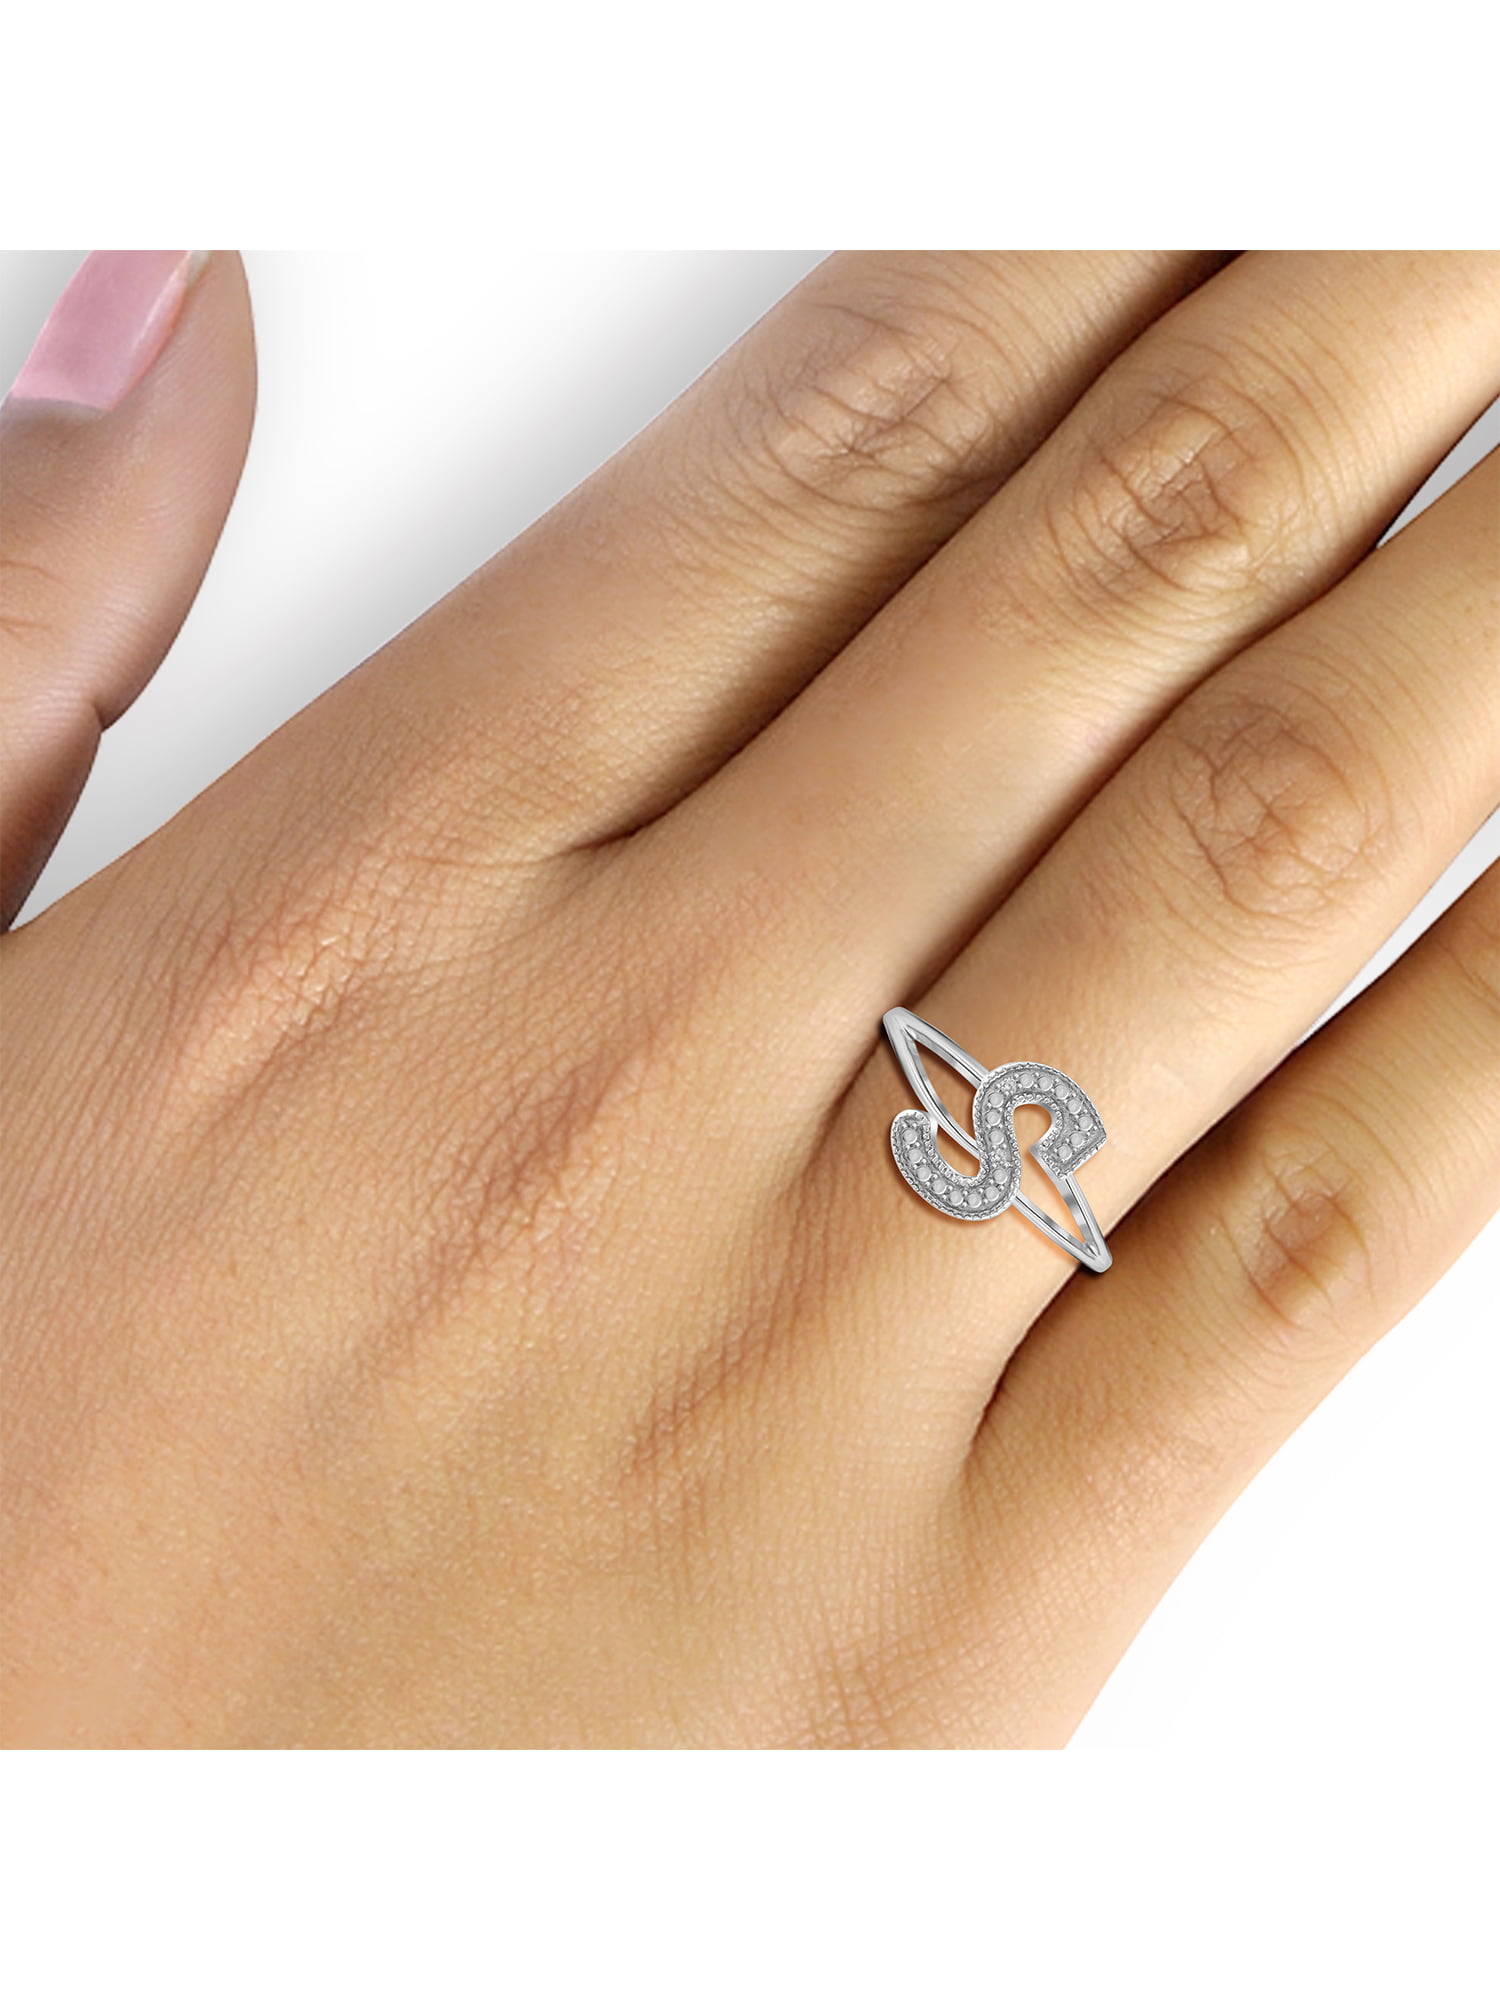 Initials Garnet Alphabet Ring | Letter jewelry, Initials, Initial ring